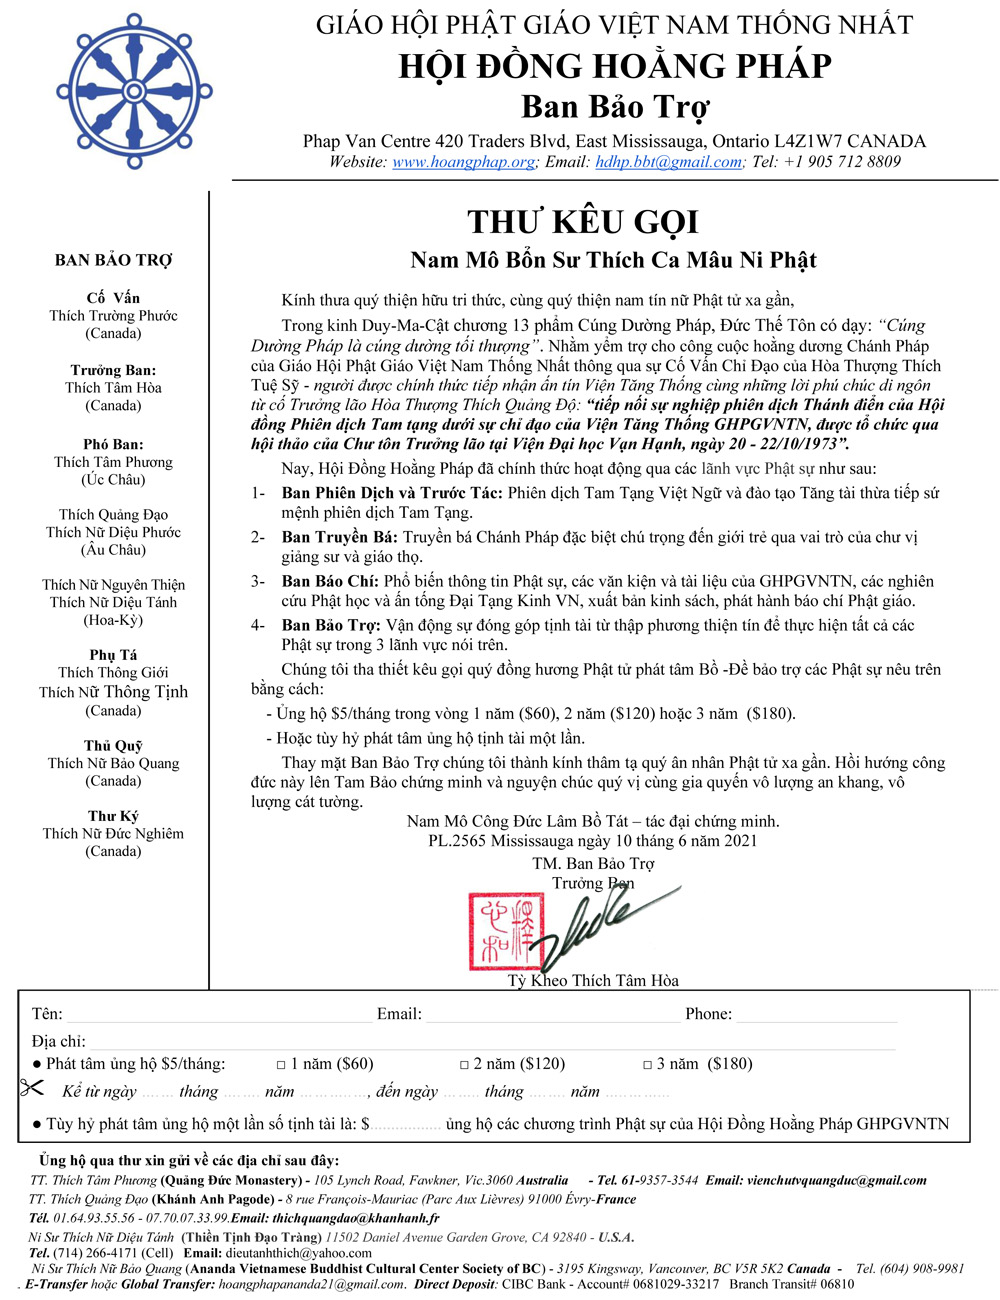 Thu Keu Goi_Ban Bao Tro-2021